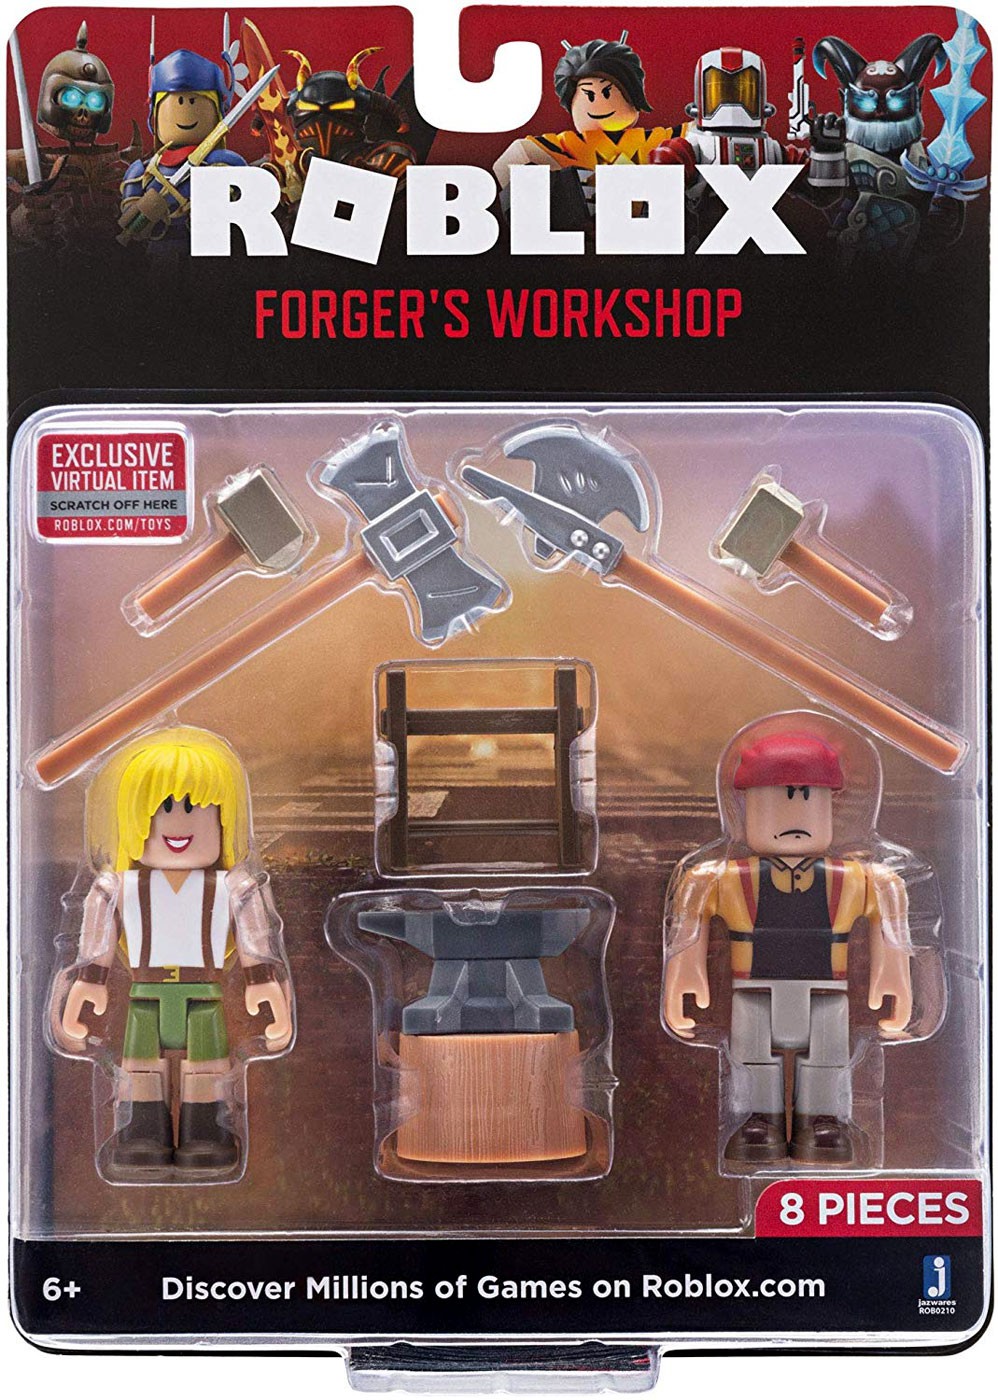 Roblox Swordburst Online Action Figure 2 Pack - mainan roblox murah